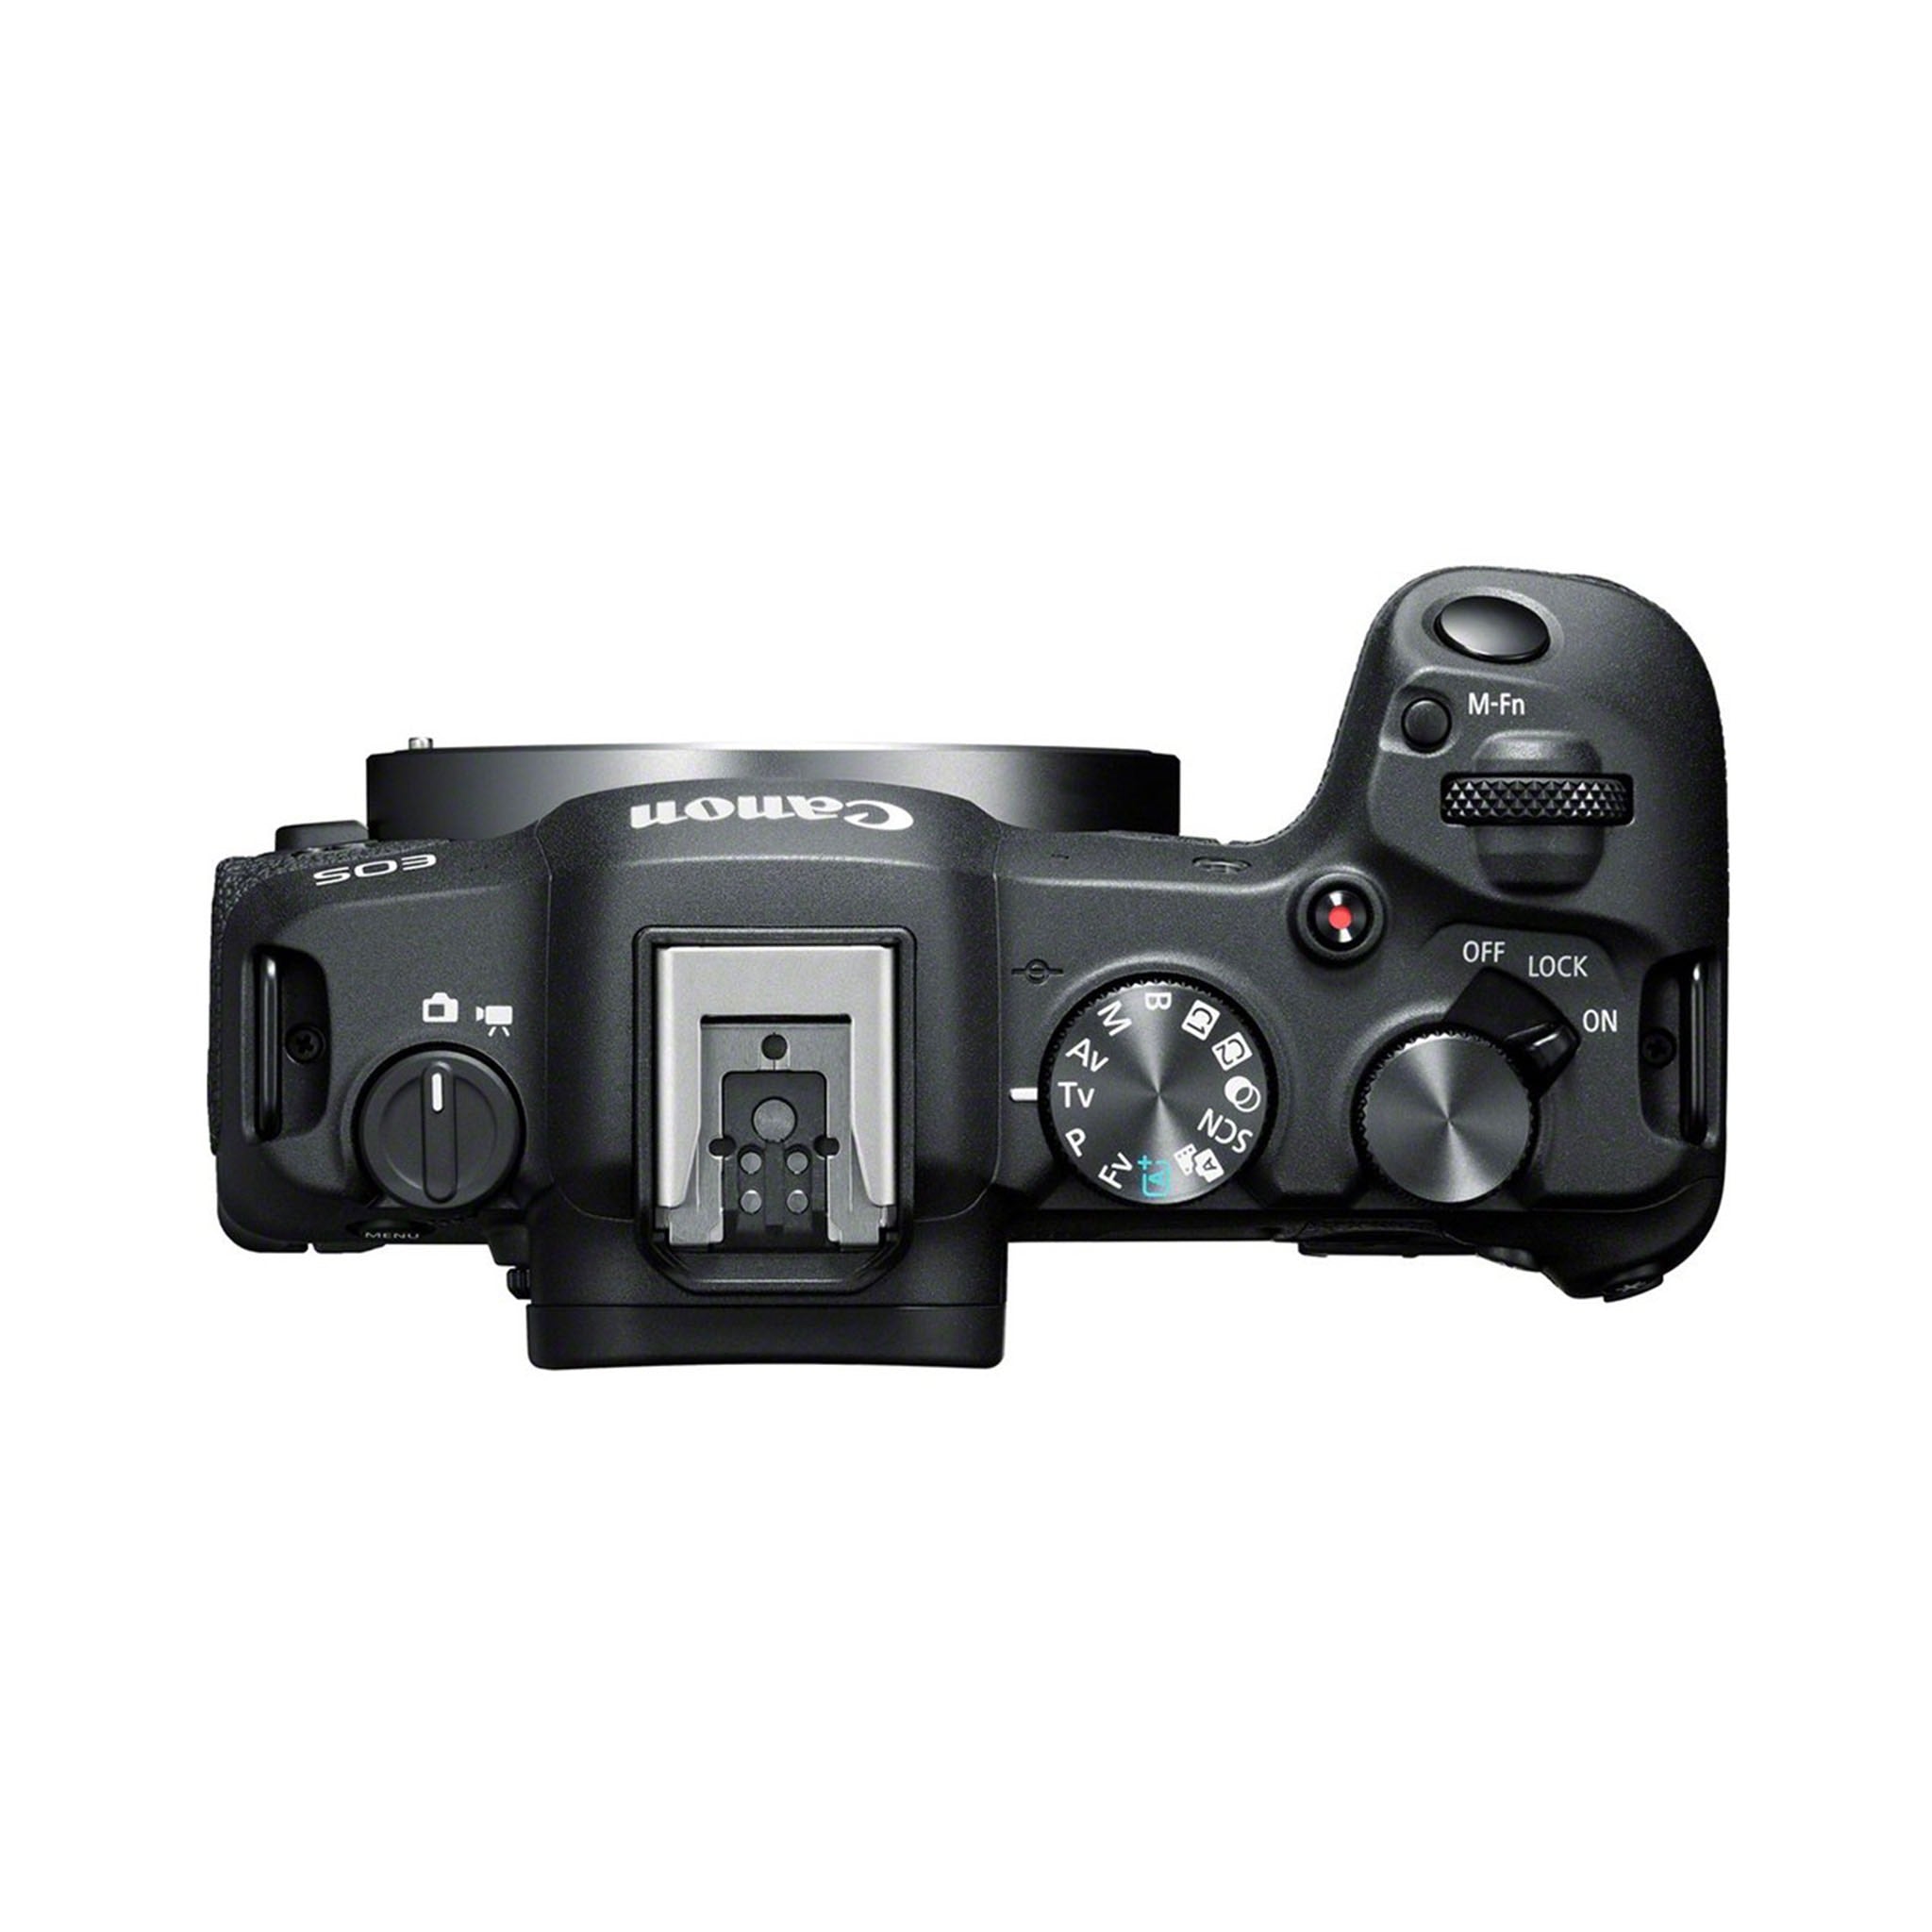 Canon PowerShot G7X Mark II Compact Camera Centre Canon G7X Dublin